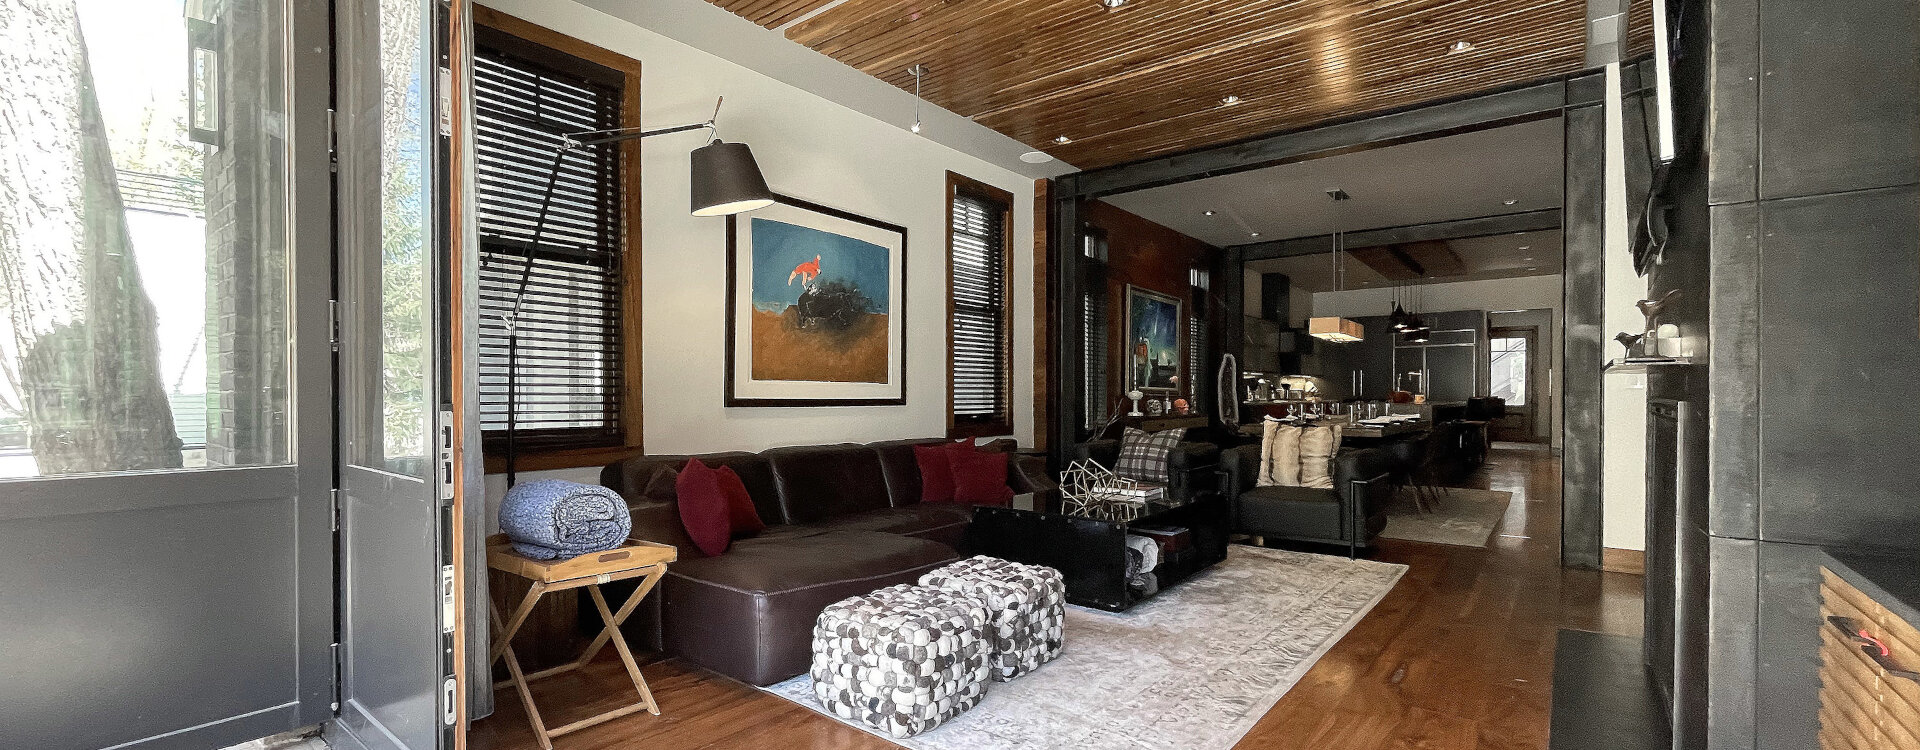 3.01-telluride-parkside-retreat-front-deck-livingroom